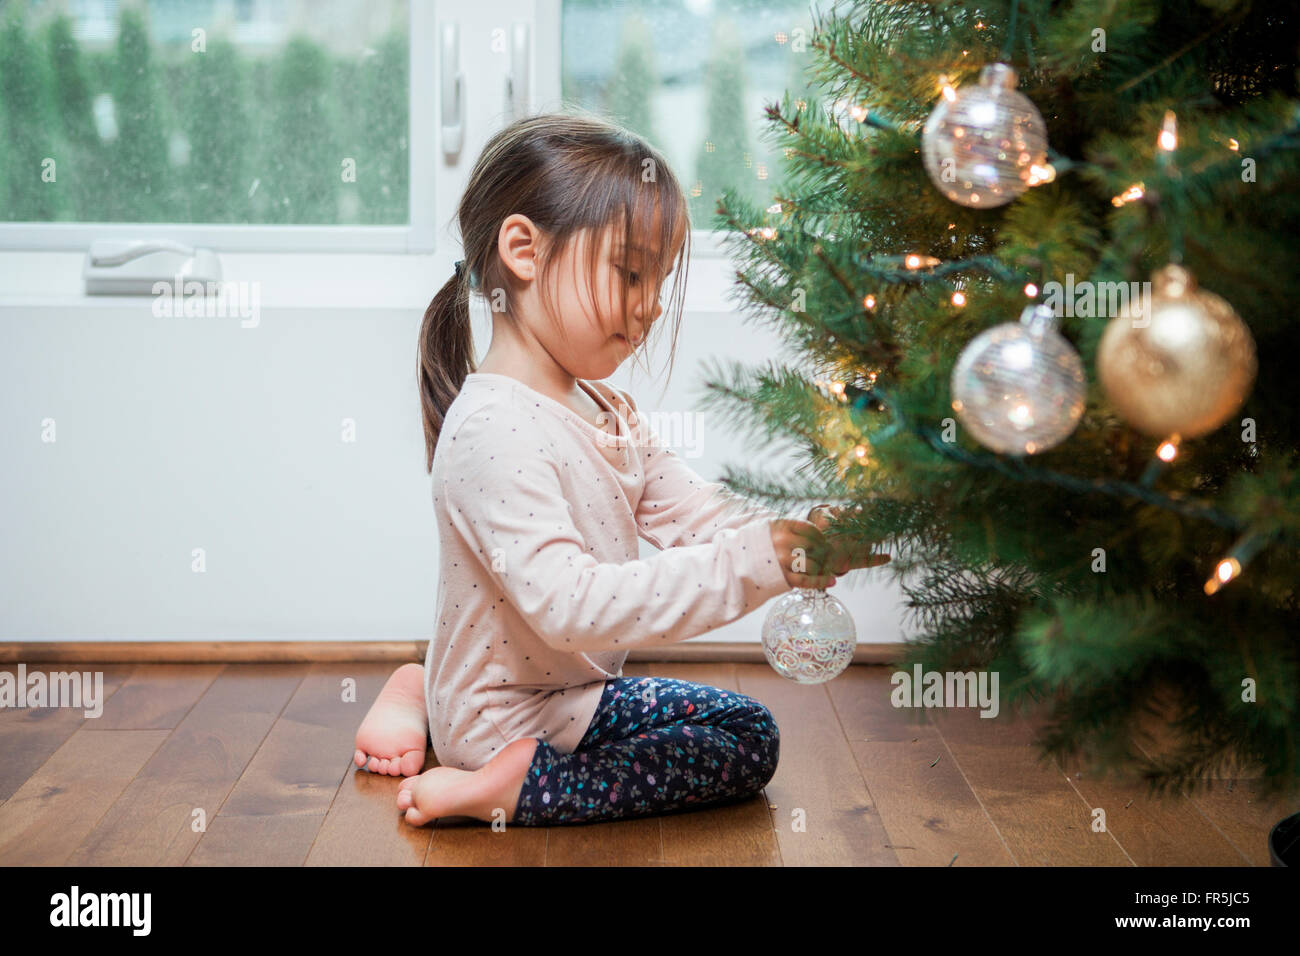 Toddler girl decorating Christmas tree Stock Photo